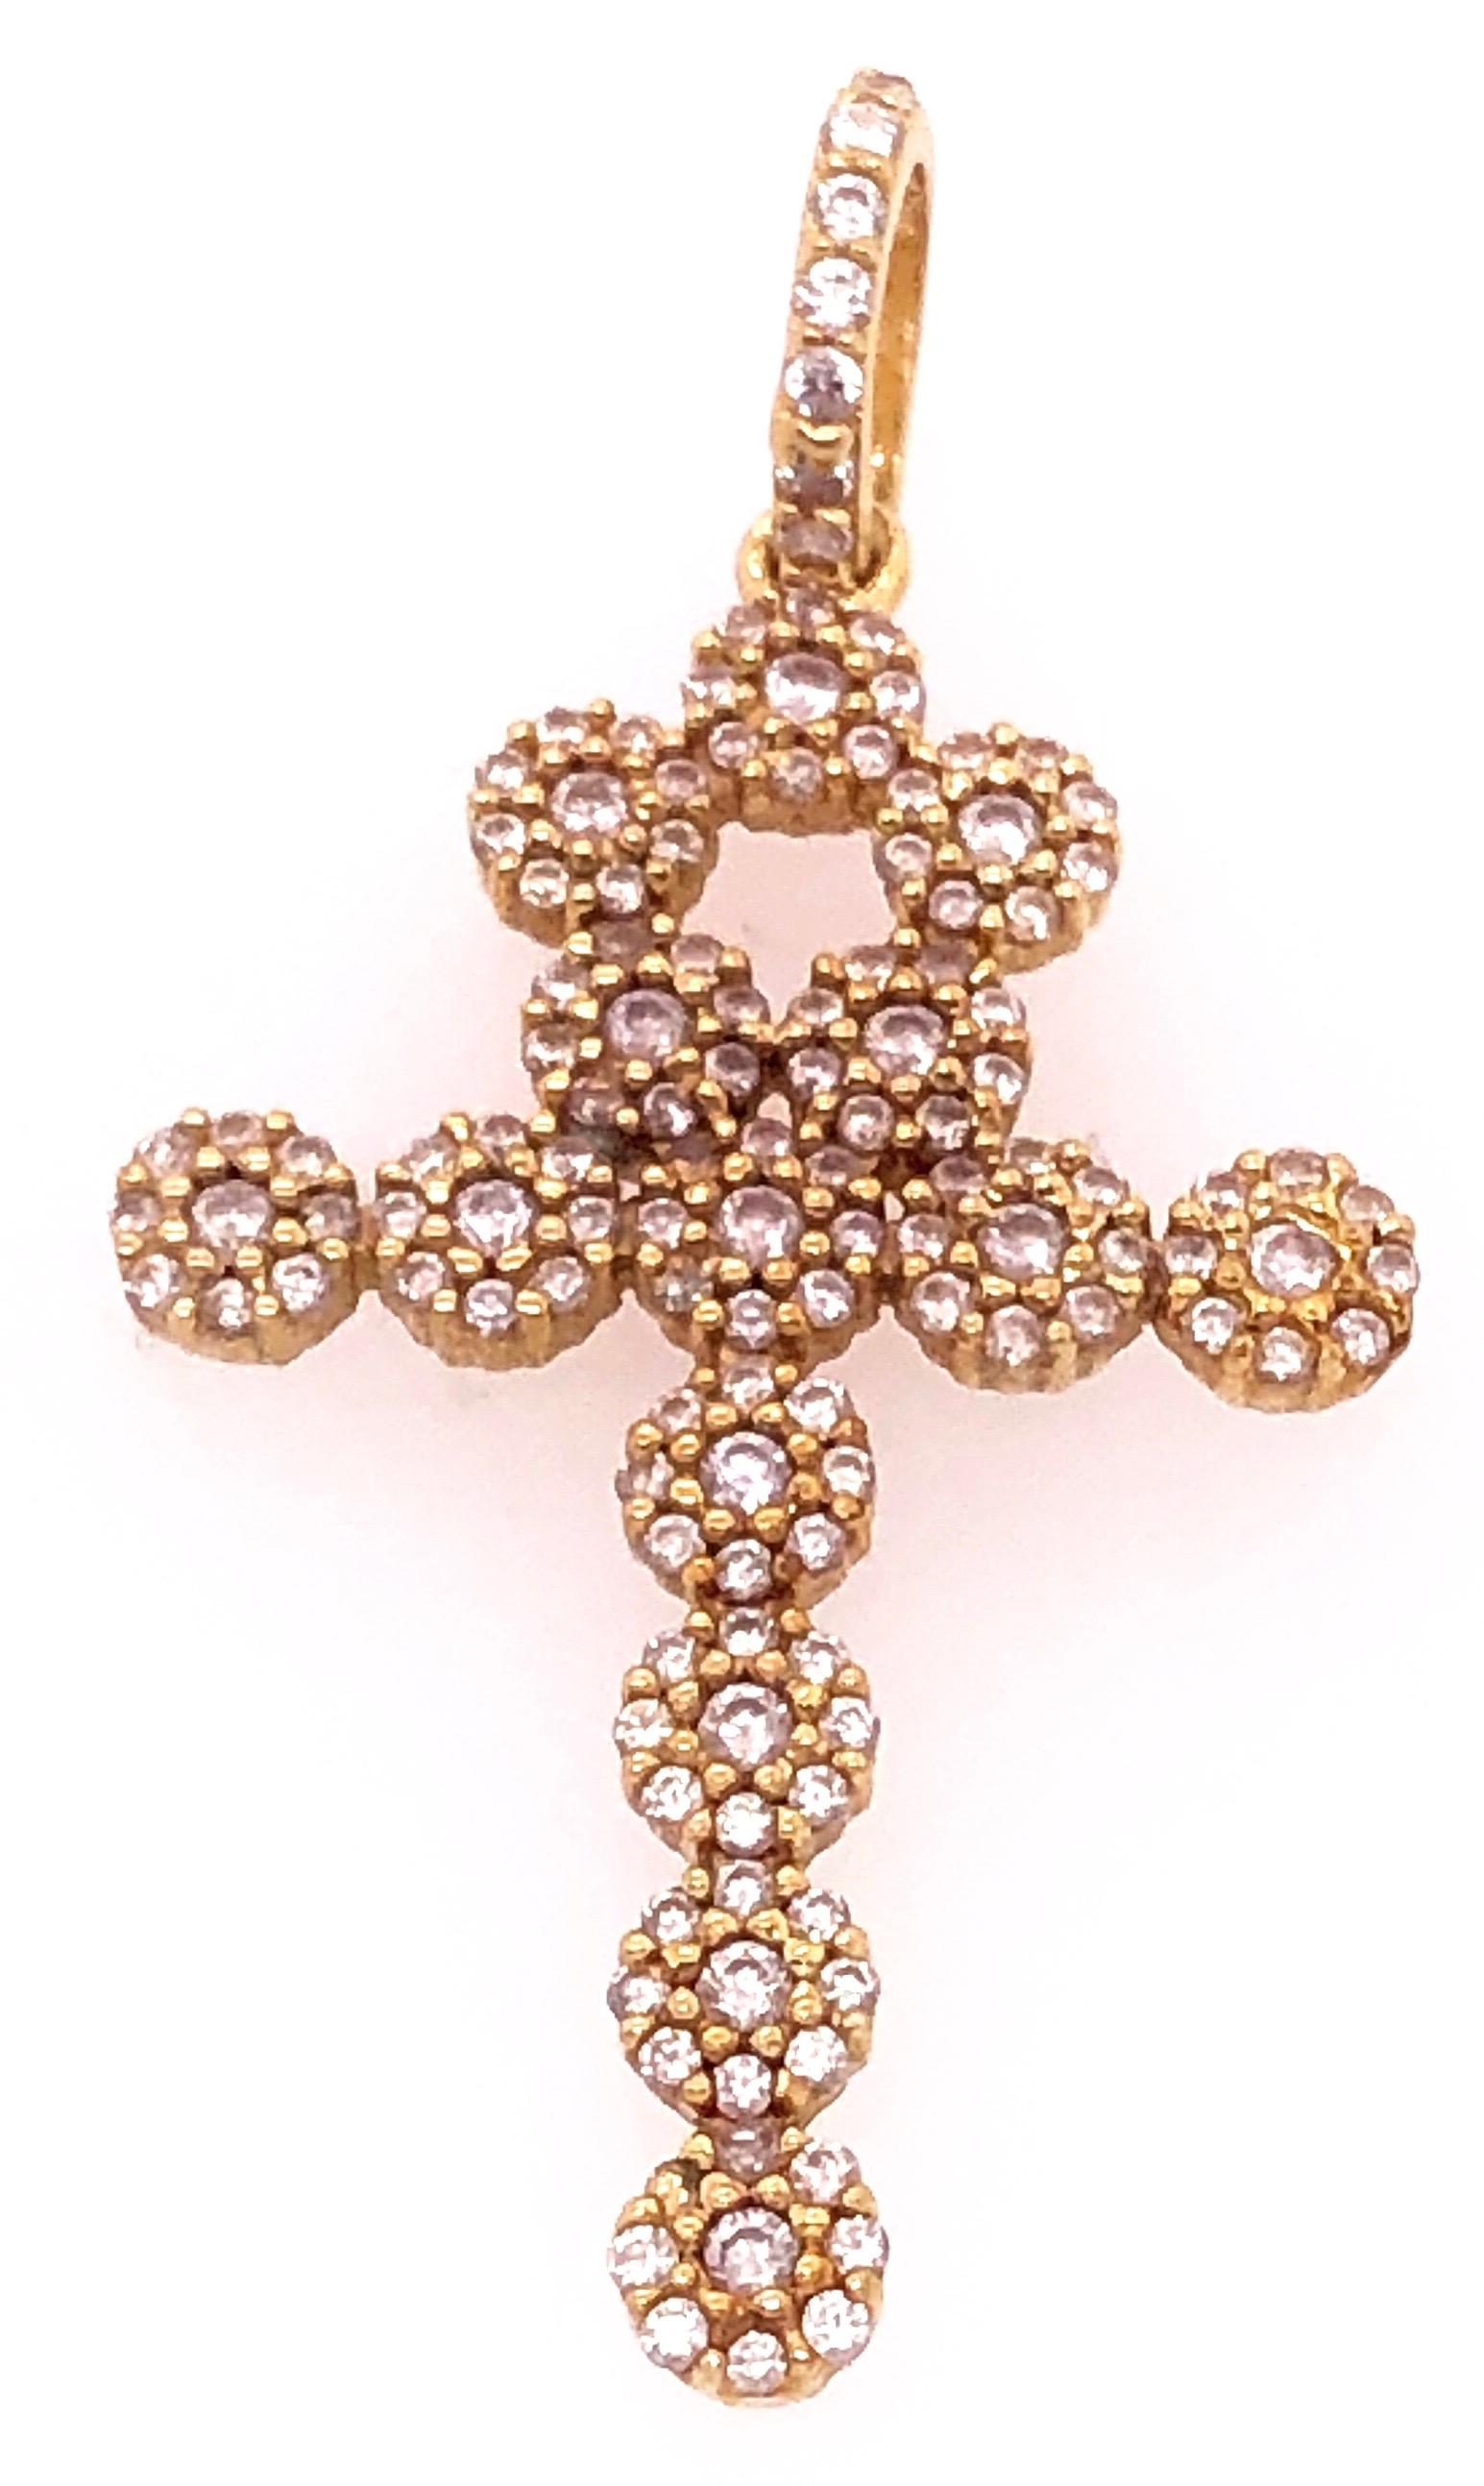 Taille ronde Breloque / pendentif religieux en or jaune 14 carats avec zirconium rond en vente